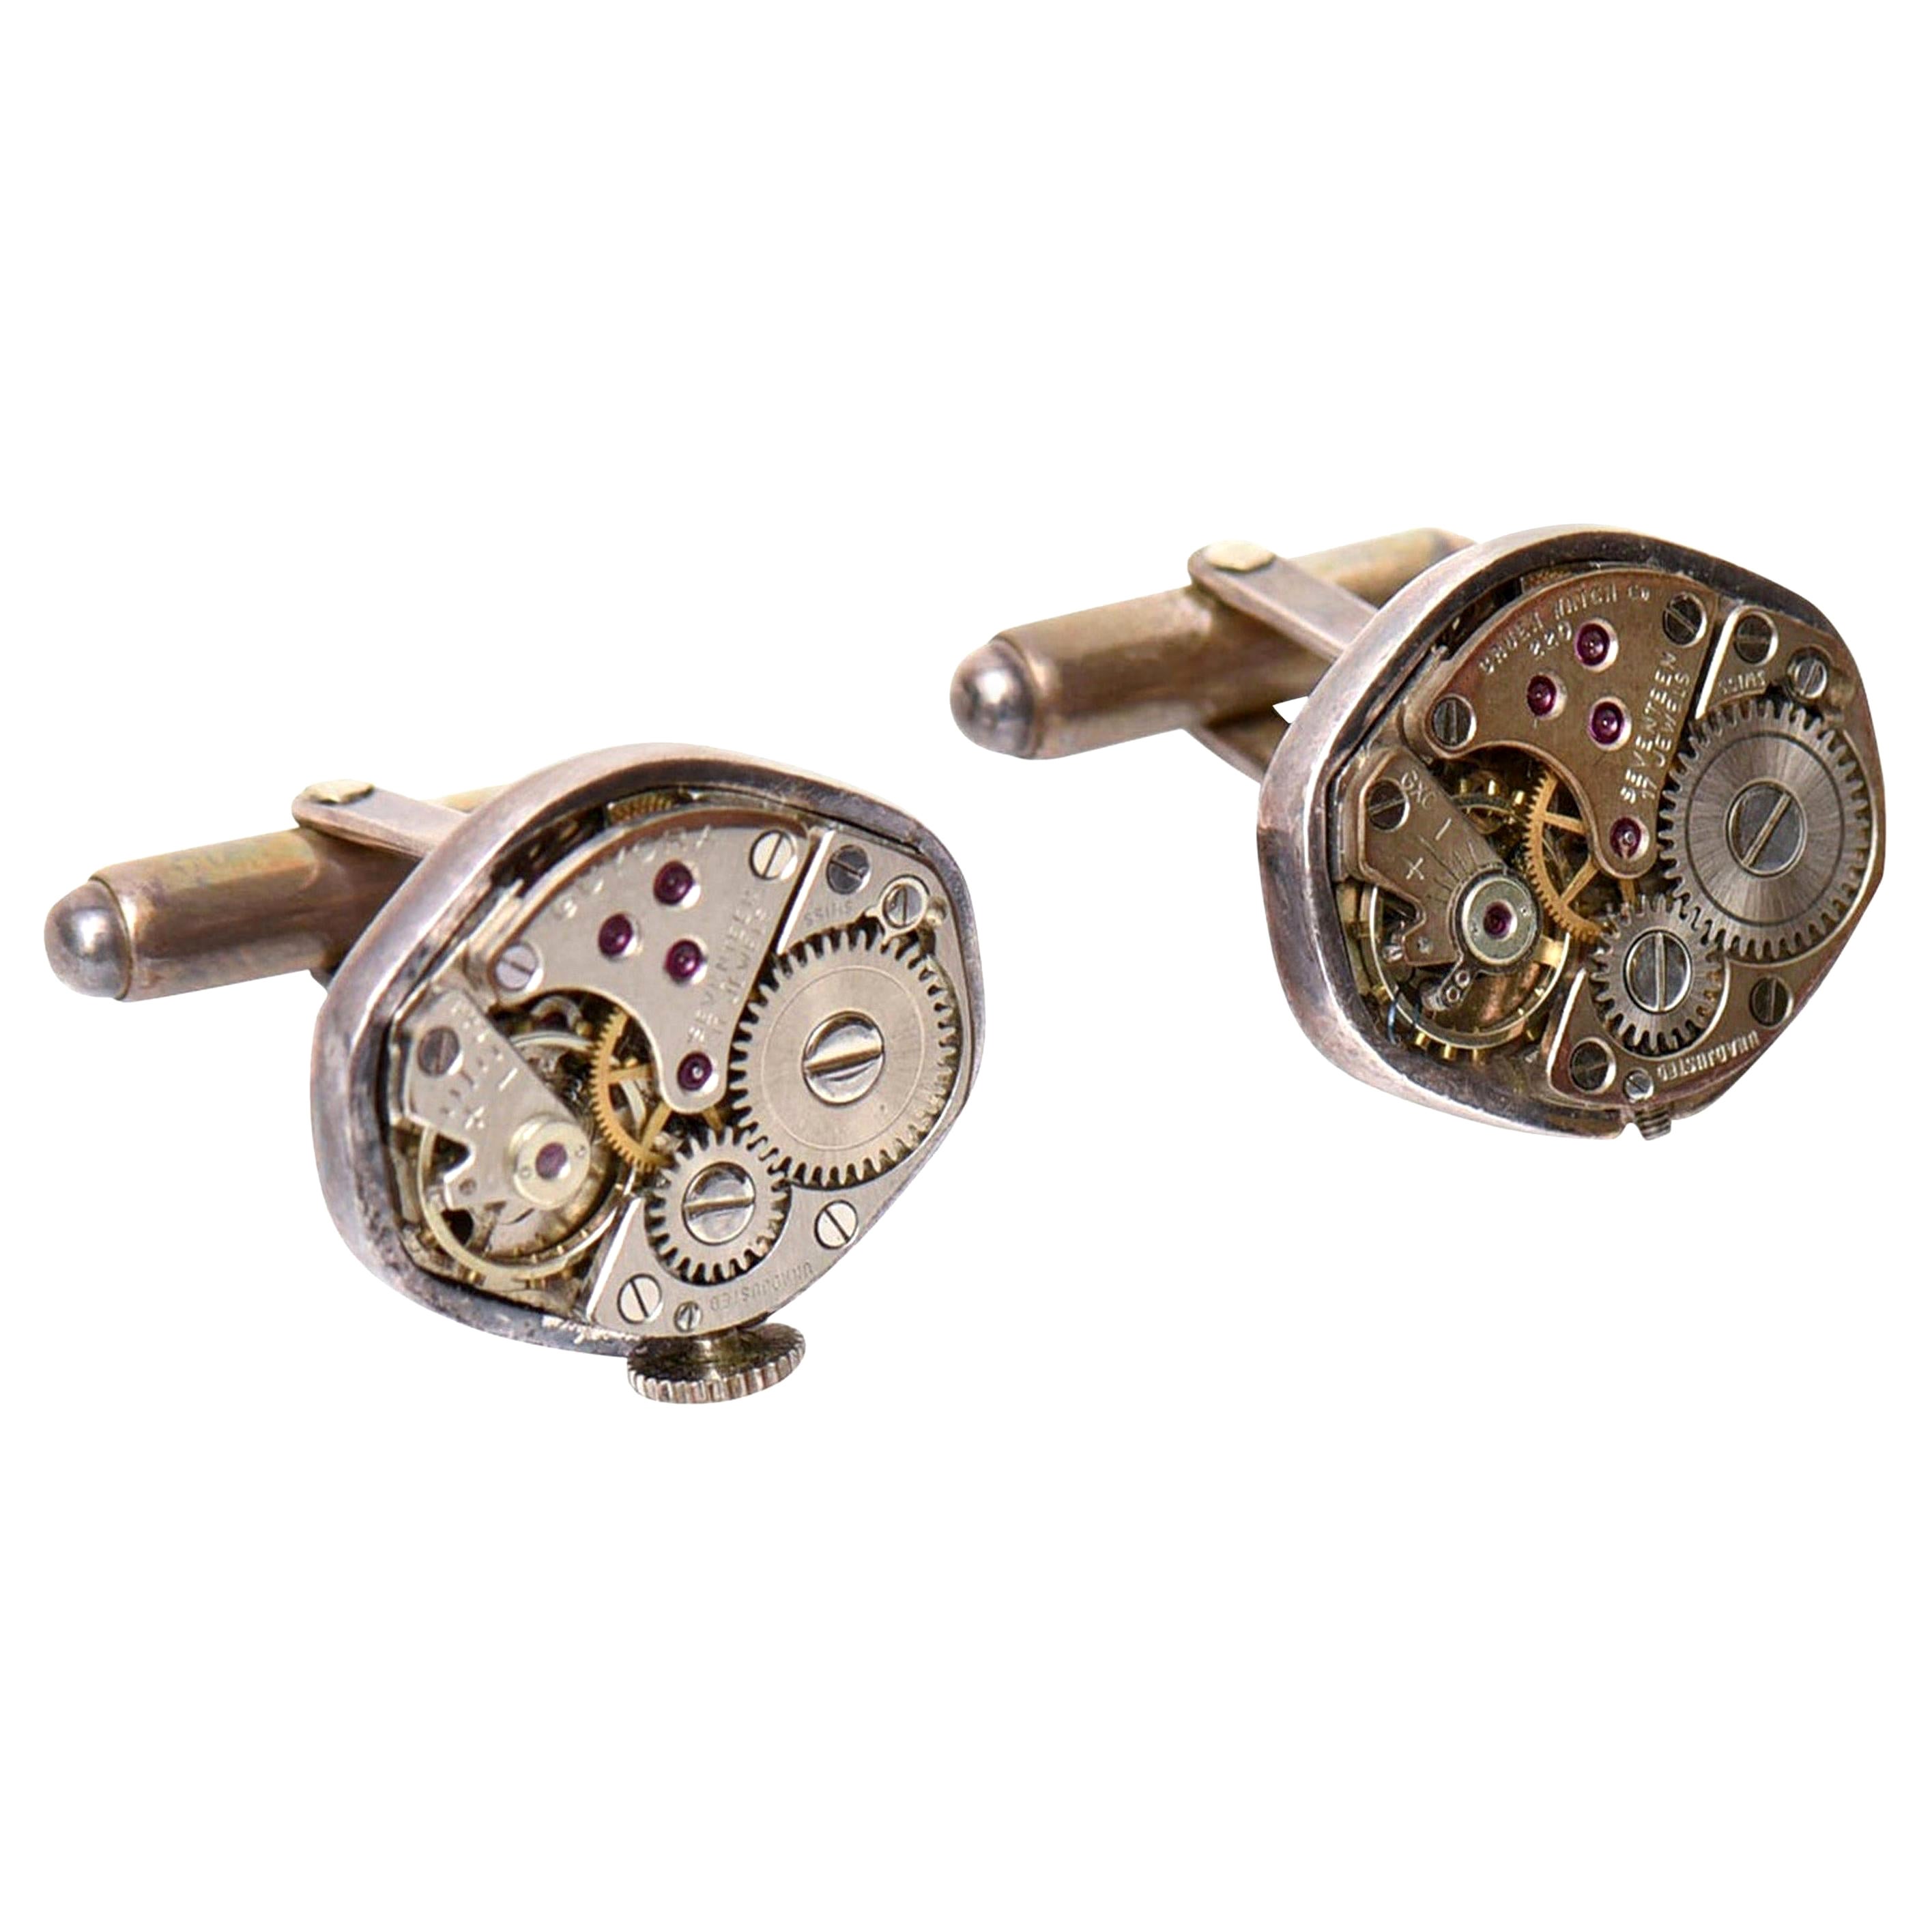  Sterling Silver Custom Watch Part Cufflinks  For Sale